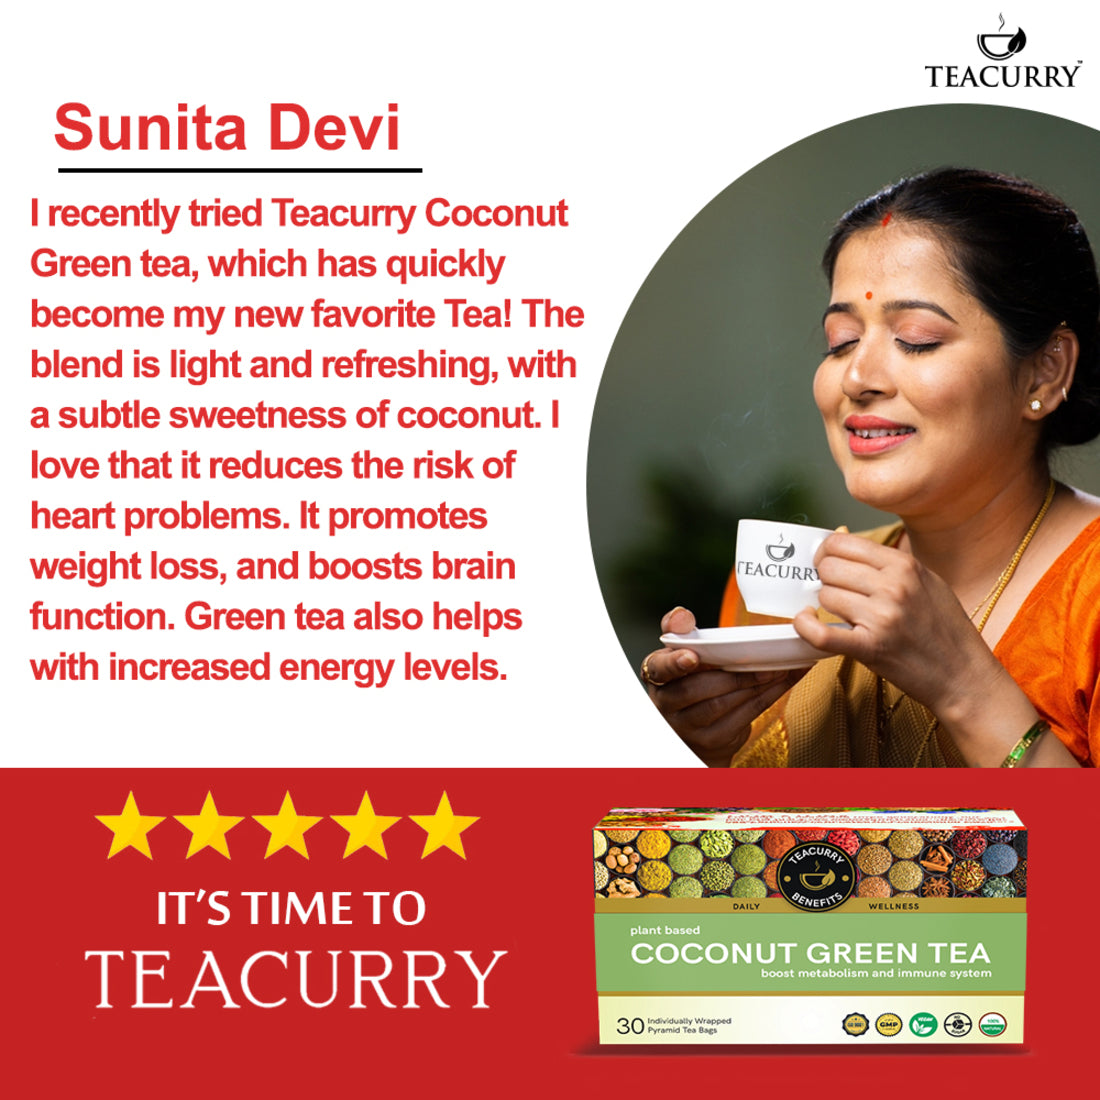 teacurry coconut green tea benefit iamage